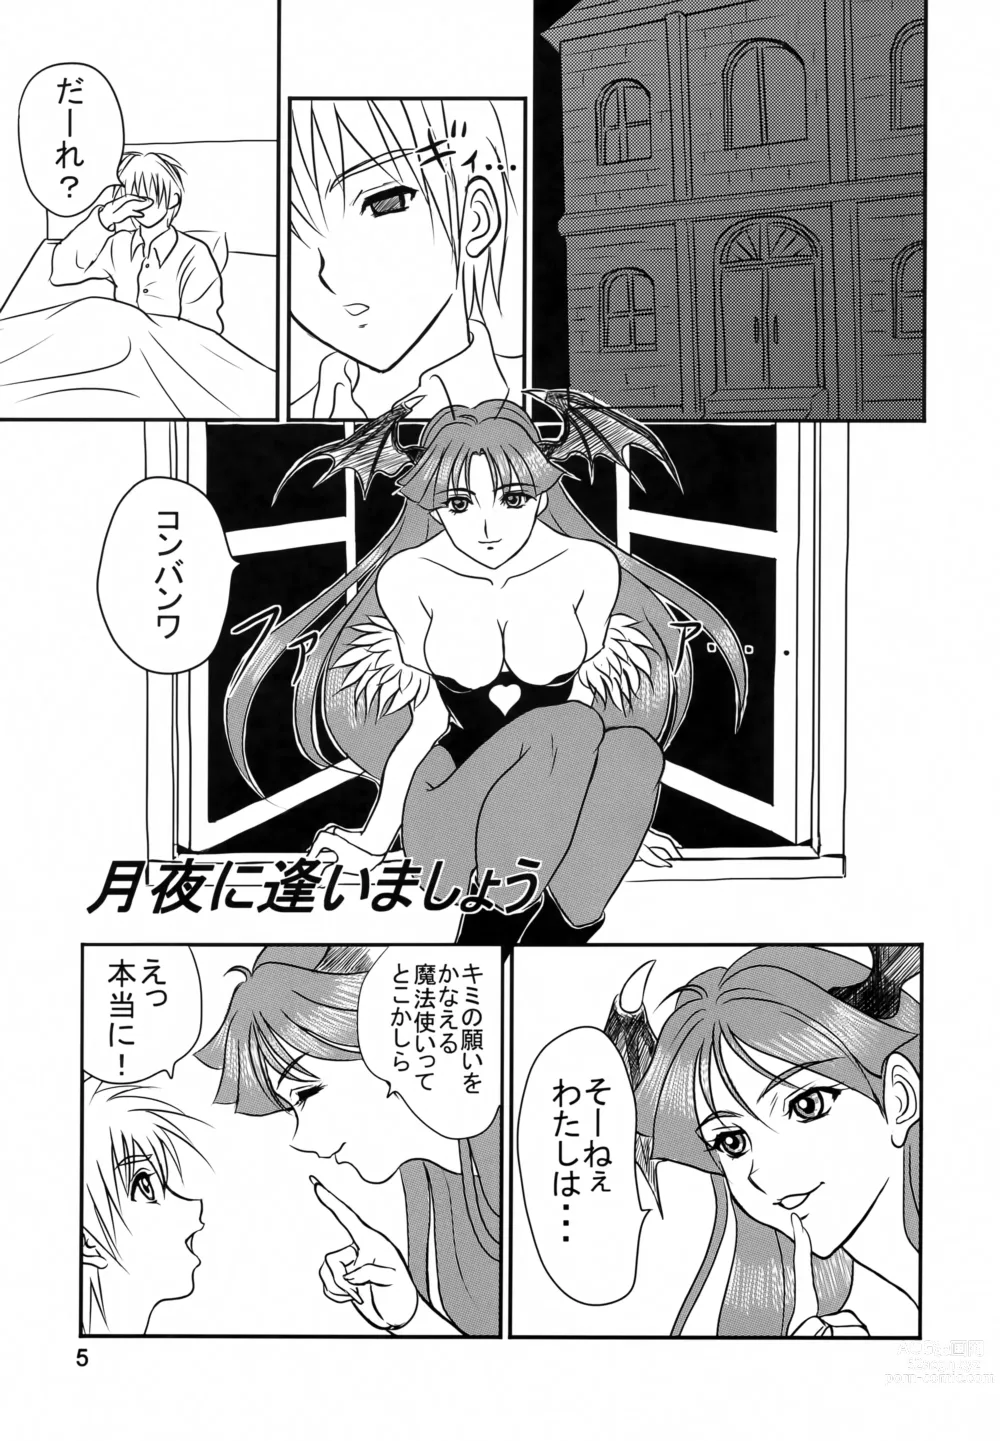 Page 4 of doujinshi EncounteR ~memories~